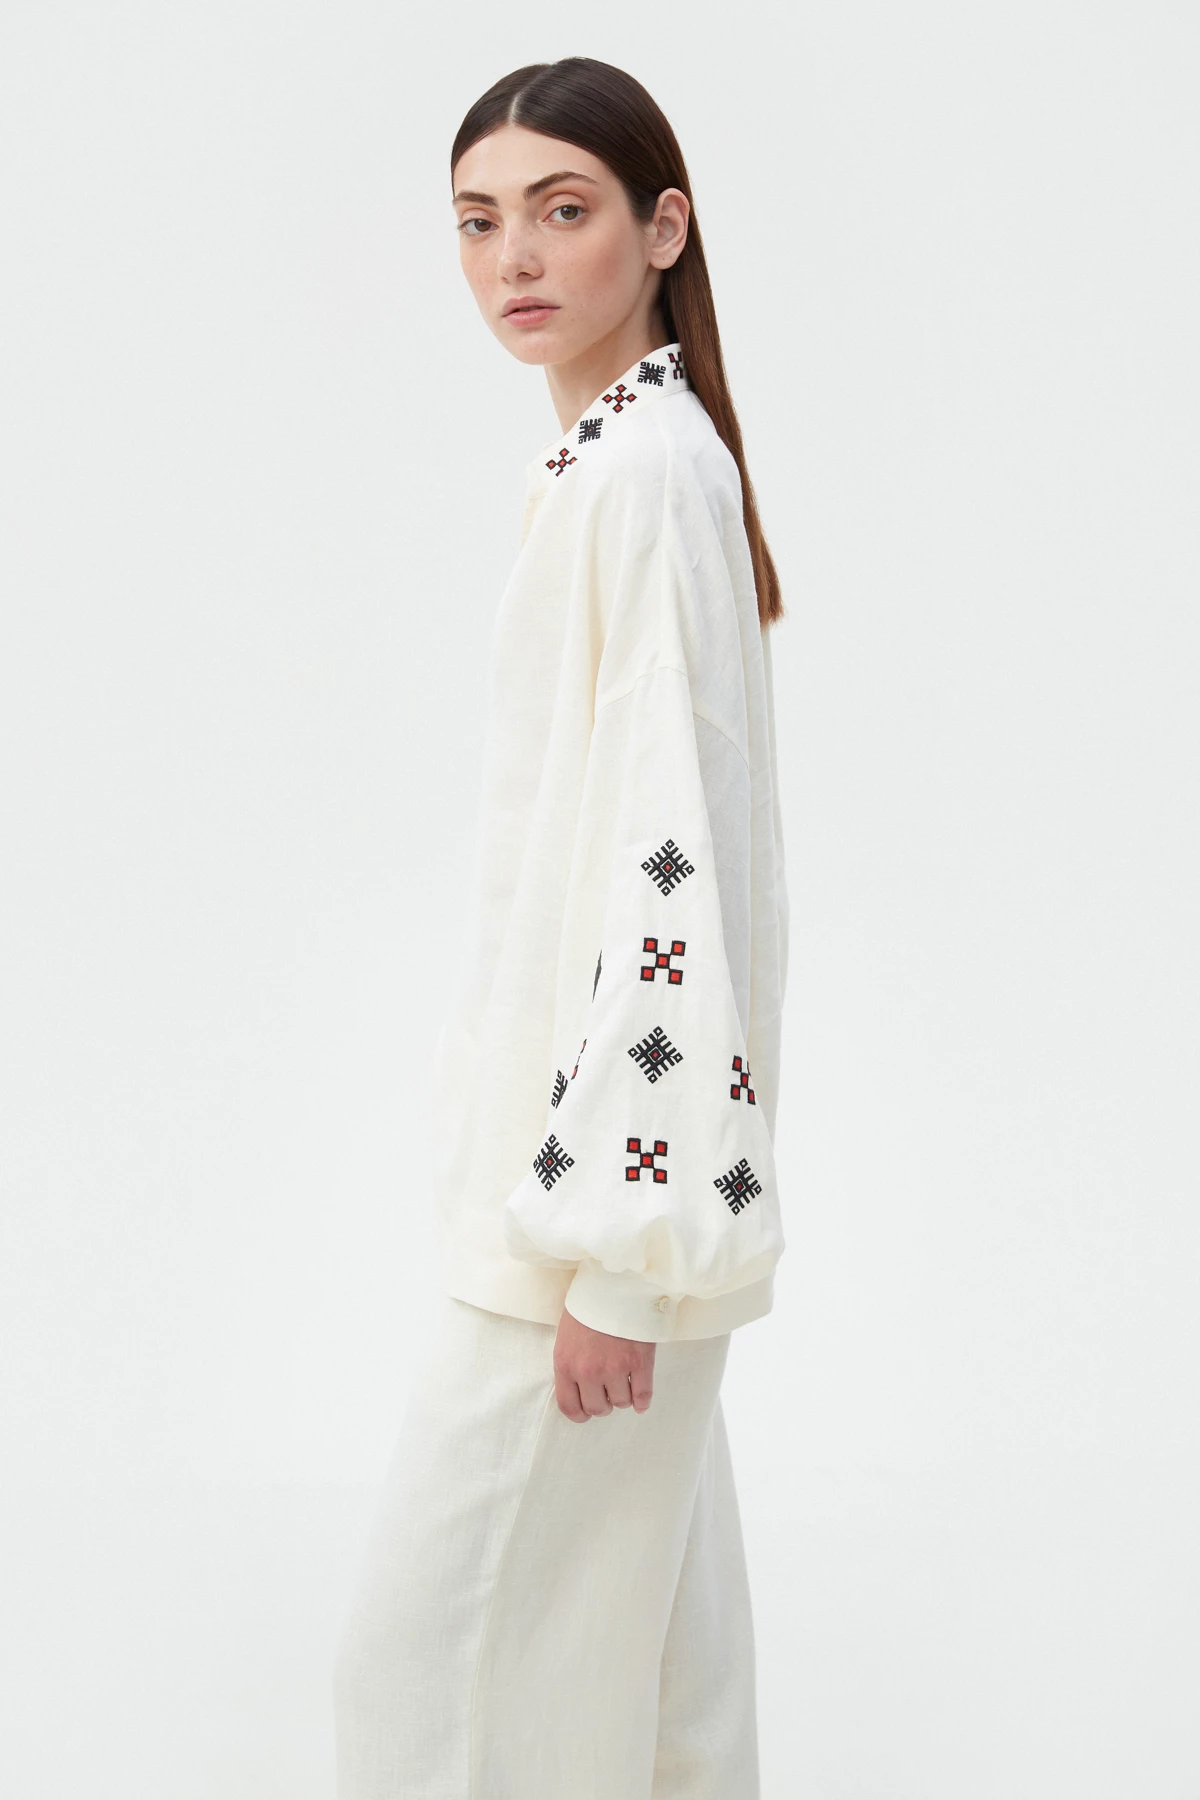 Milky linen vyshyvanka shirt with geometric embroidery, photo 3